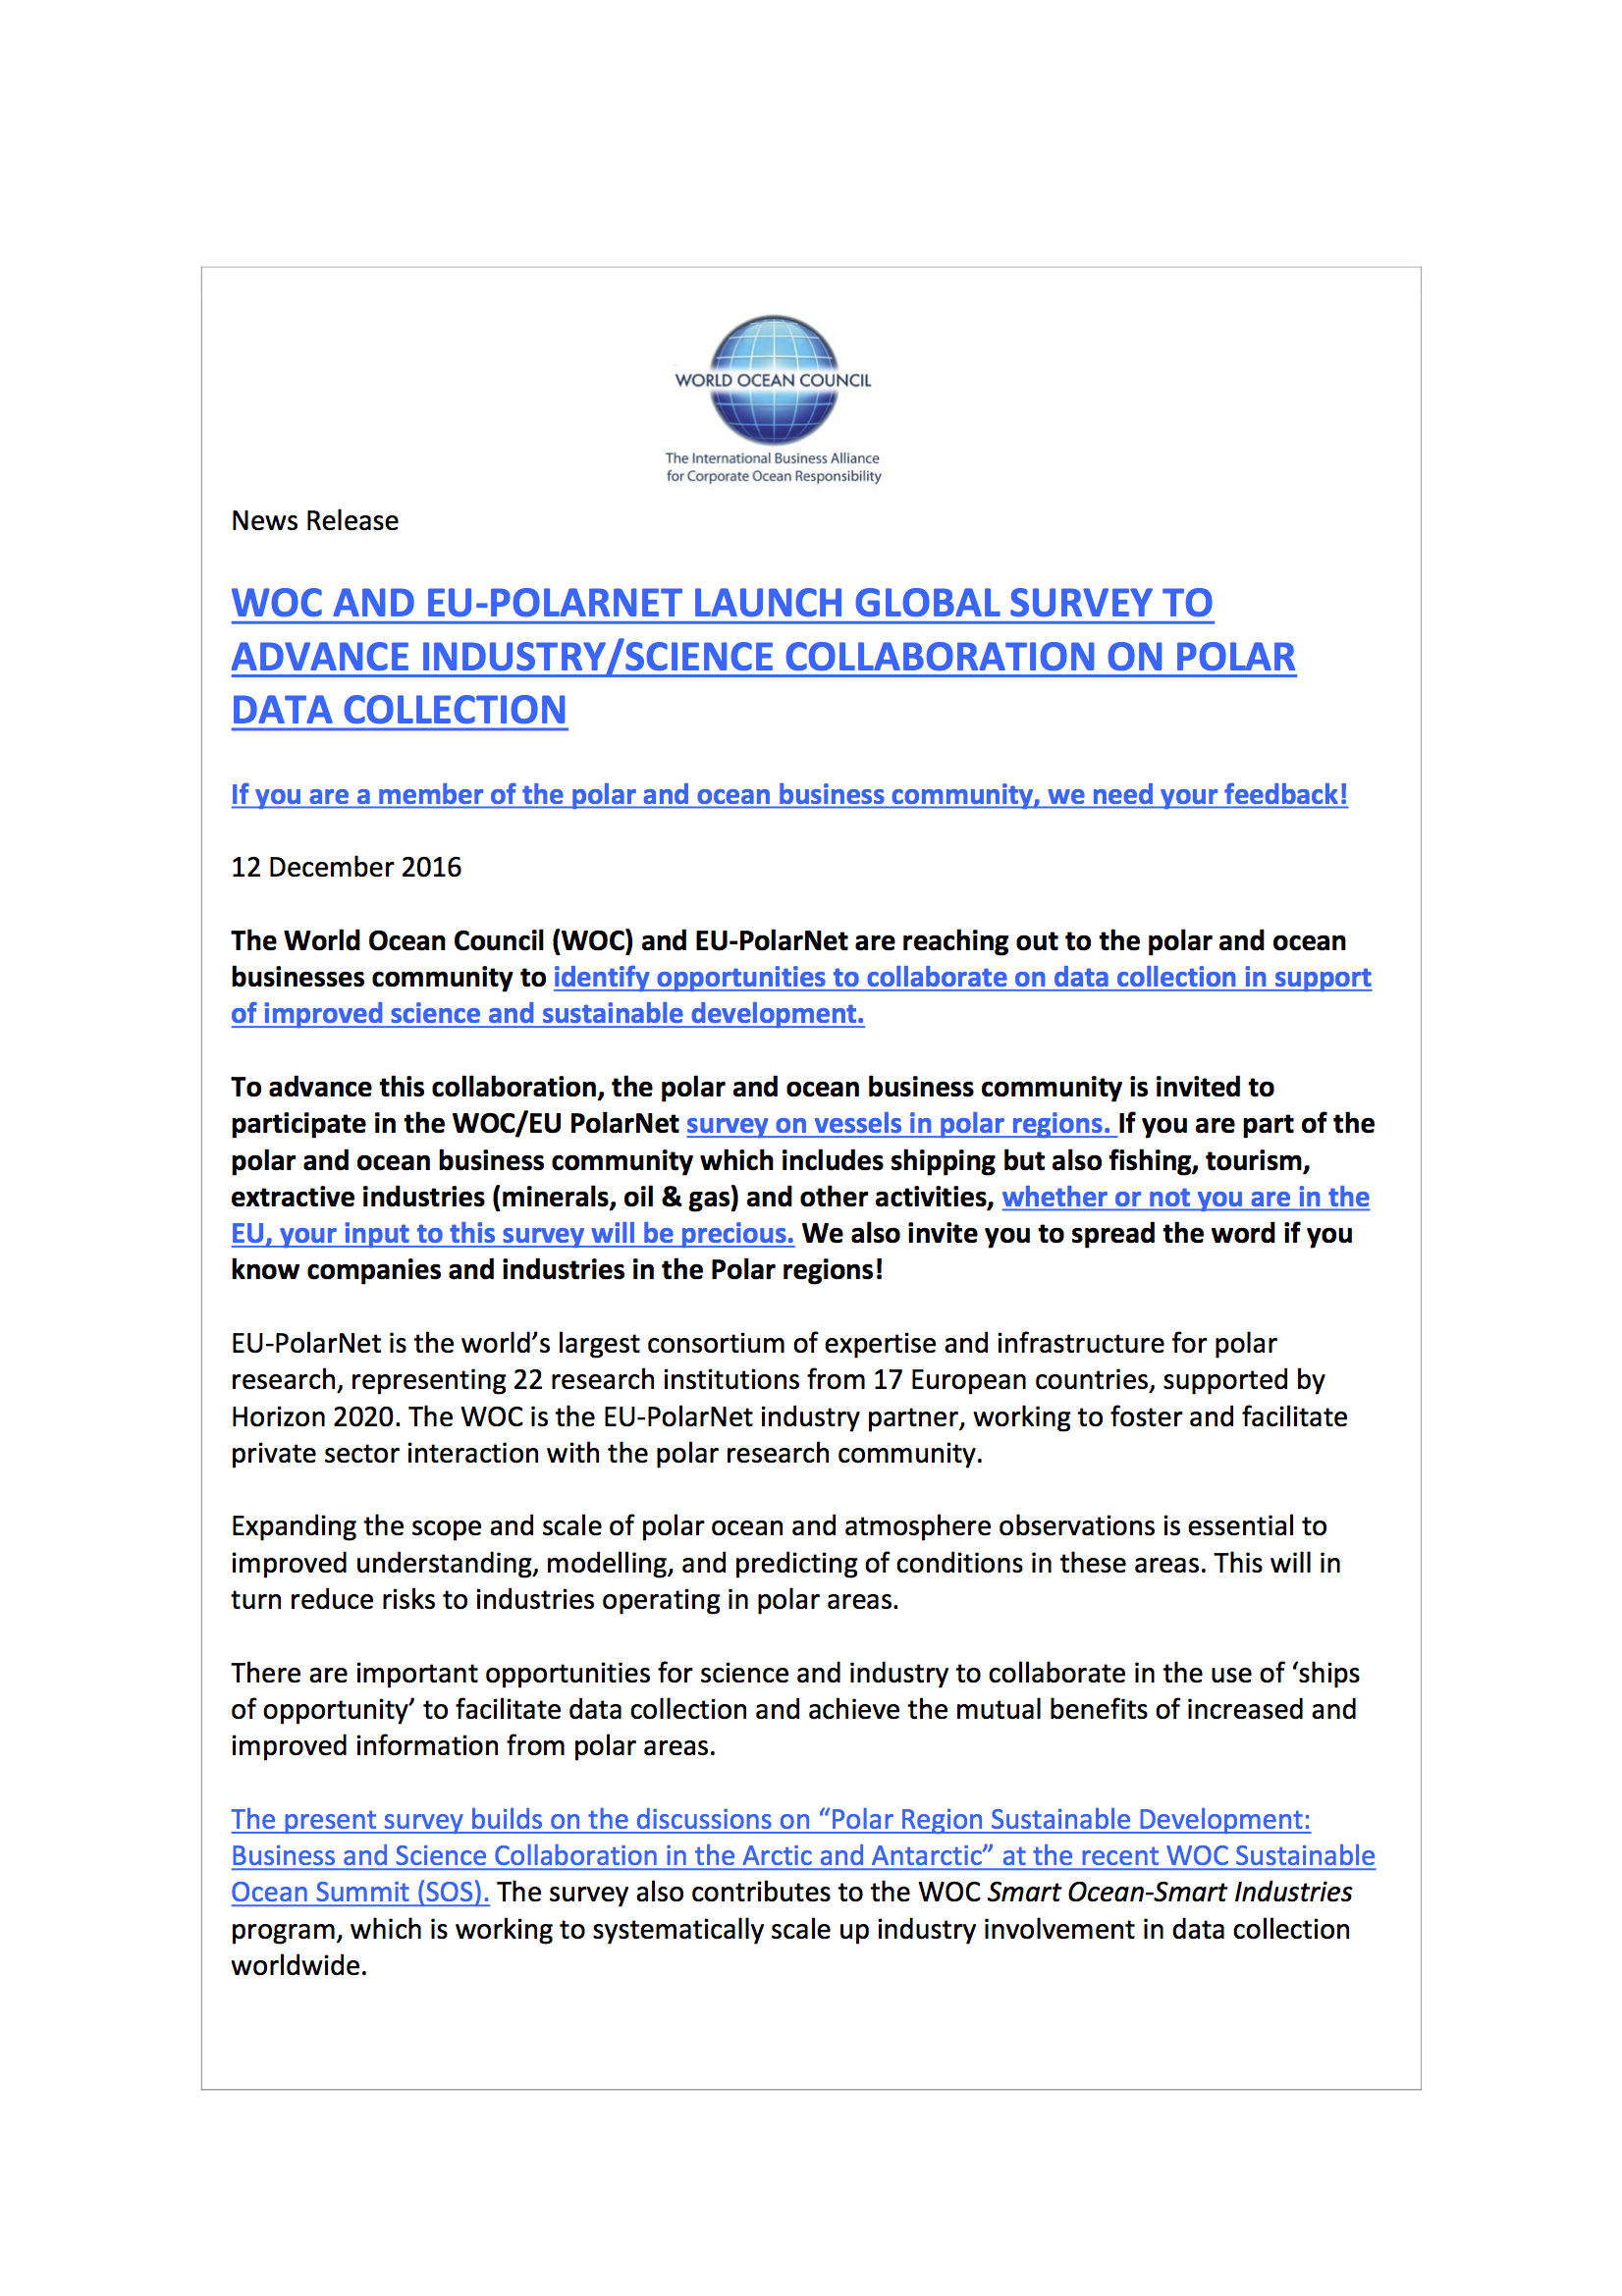 EU Polar Net and World Ocean Council Polar Regions Collaboration